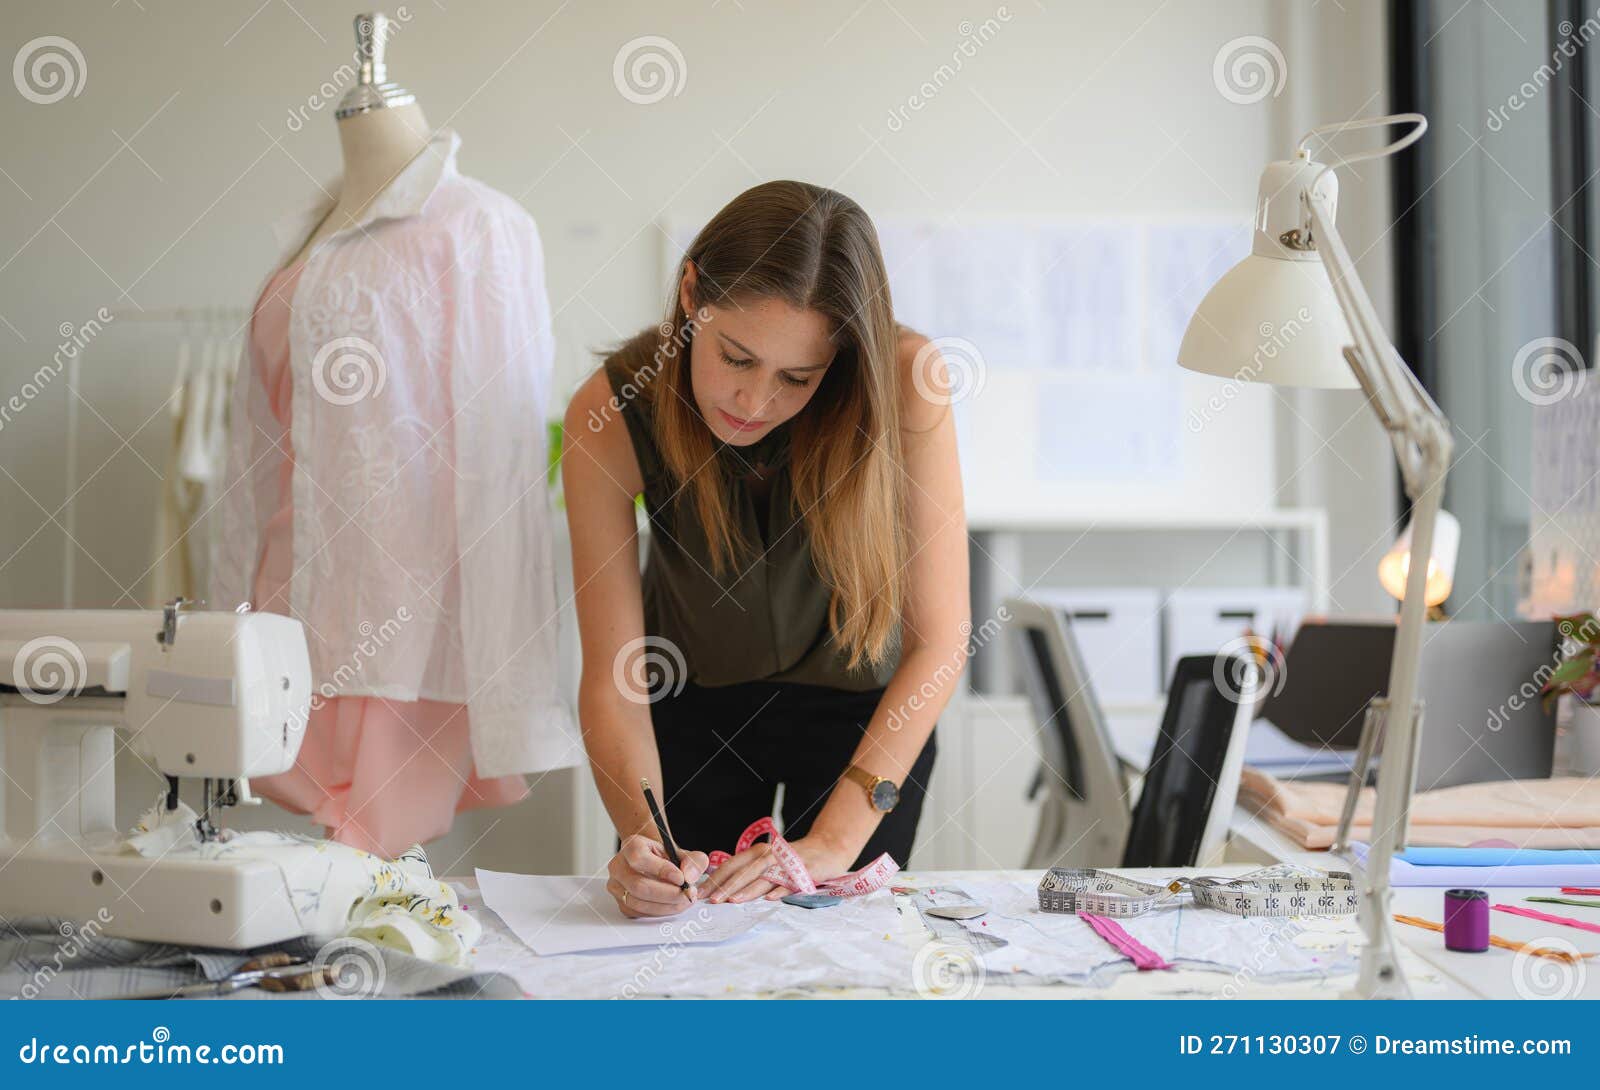 Happy Female Dressmaker Working in Workshop Studio Stock Image - Image ...